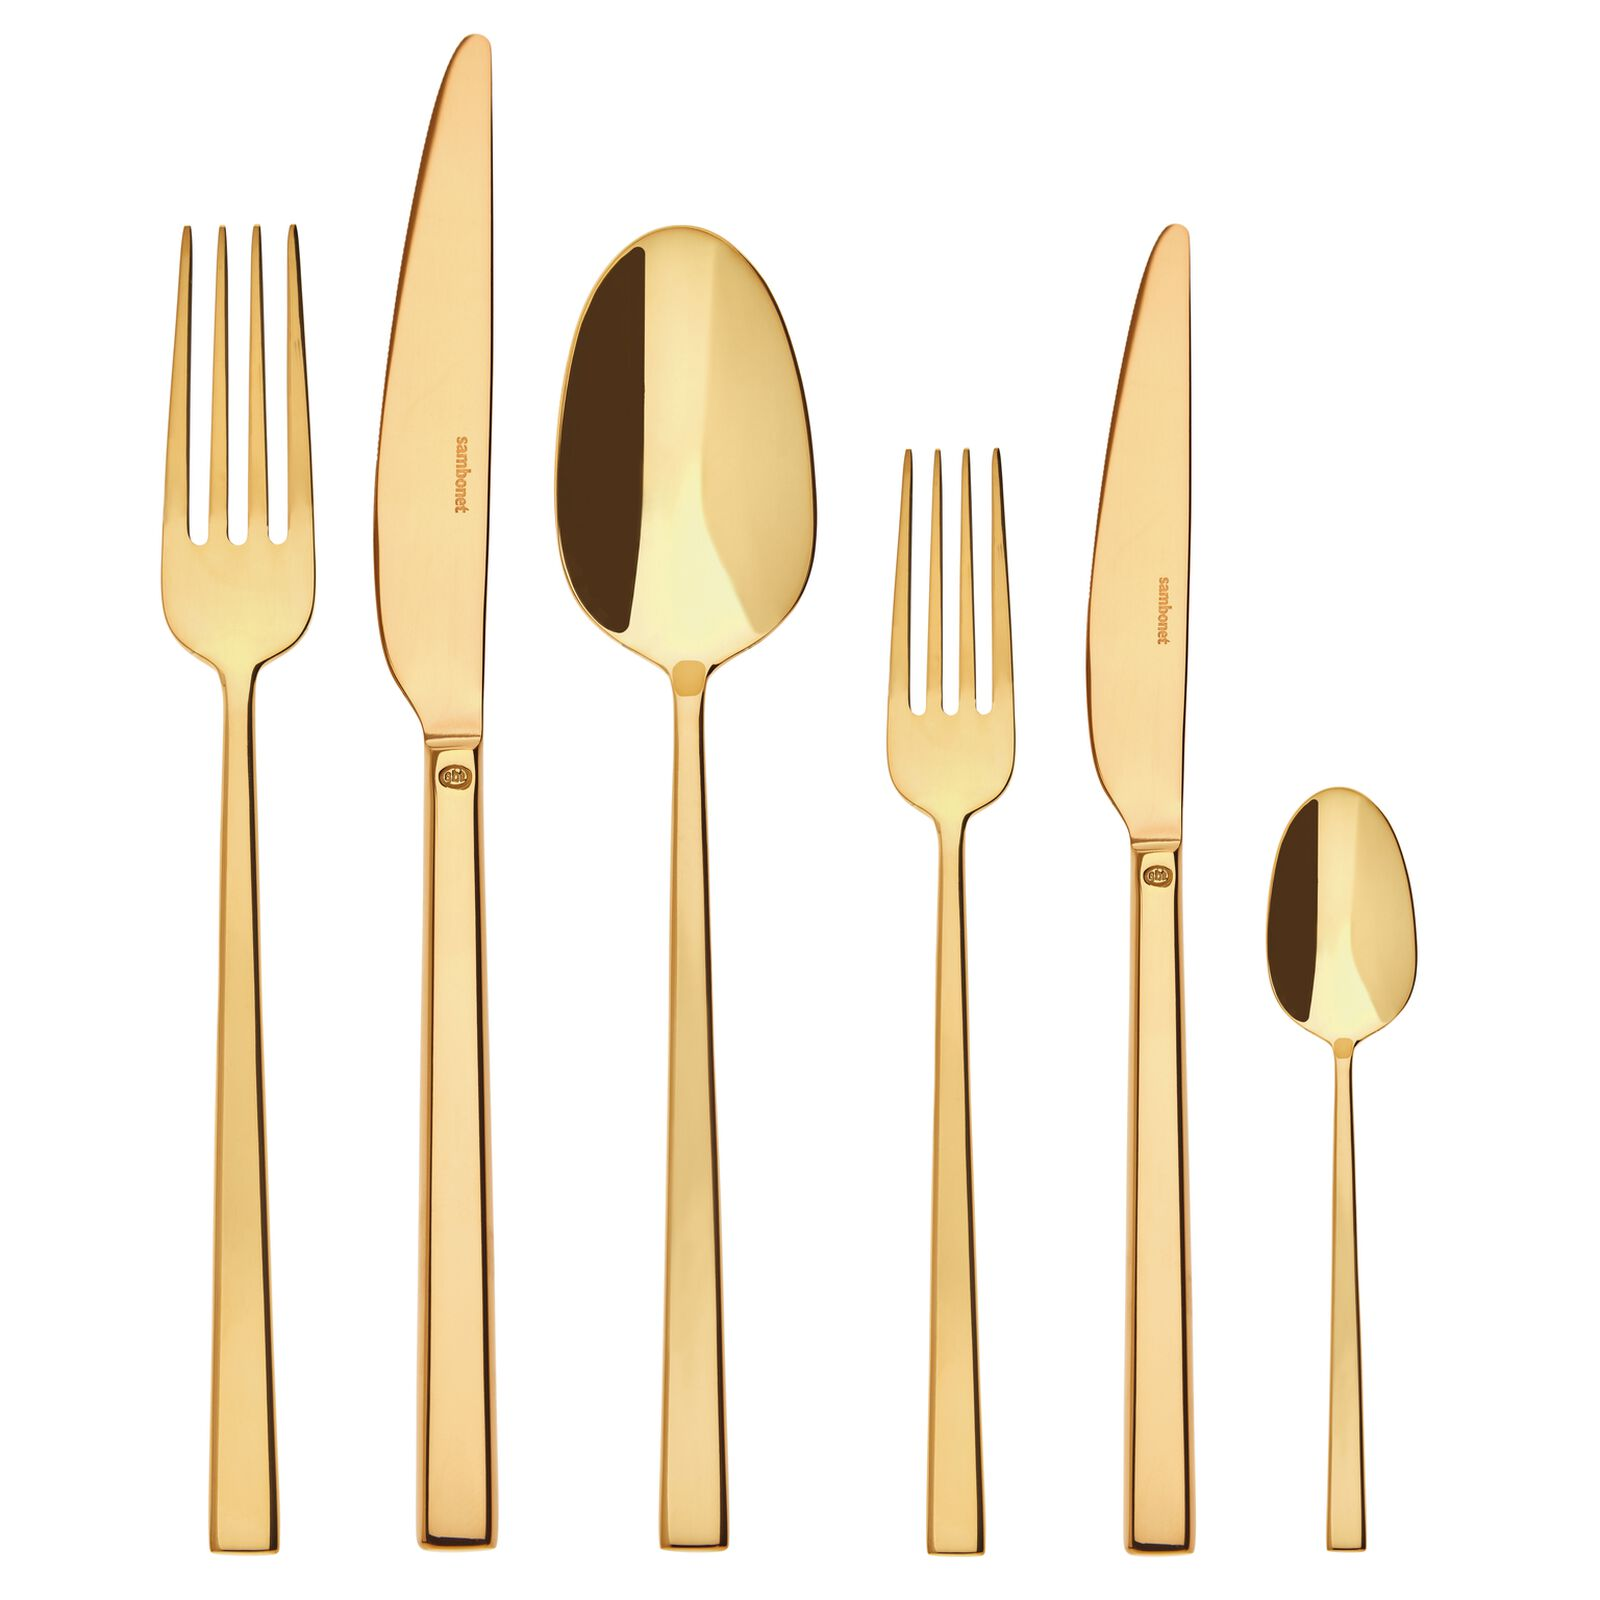 Vinci-ROCK Cutlery set PVD Gold, 36 pieces